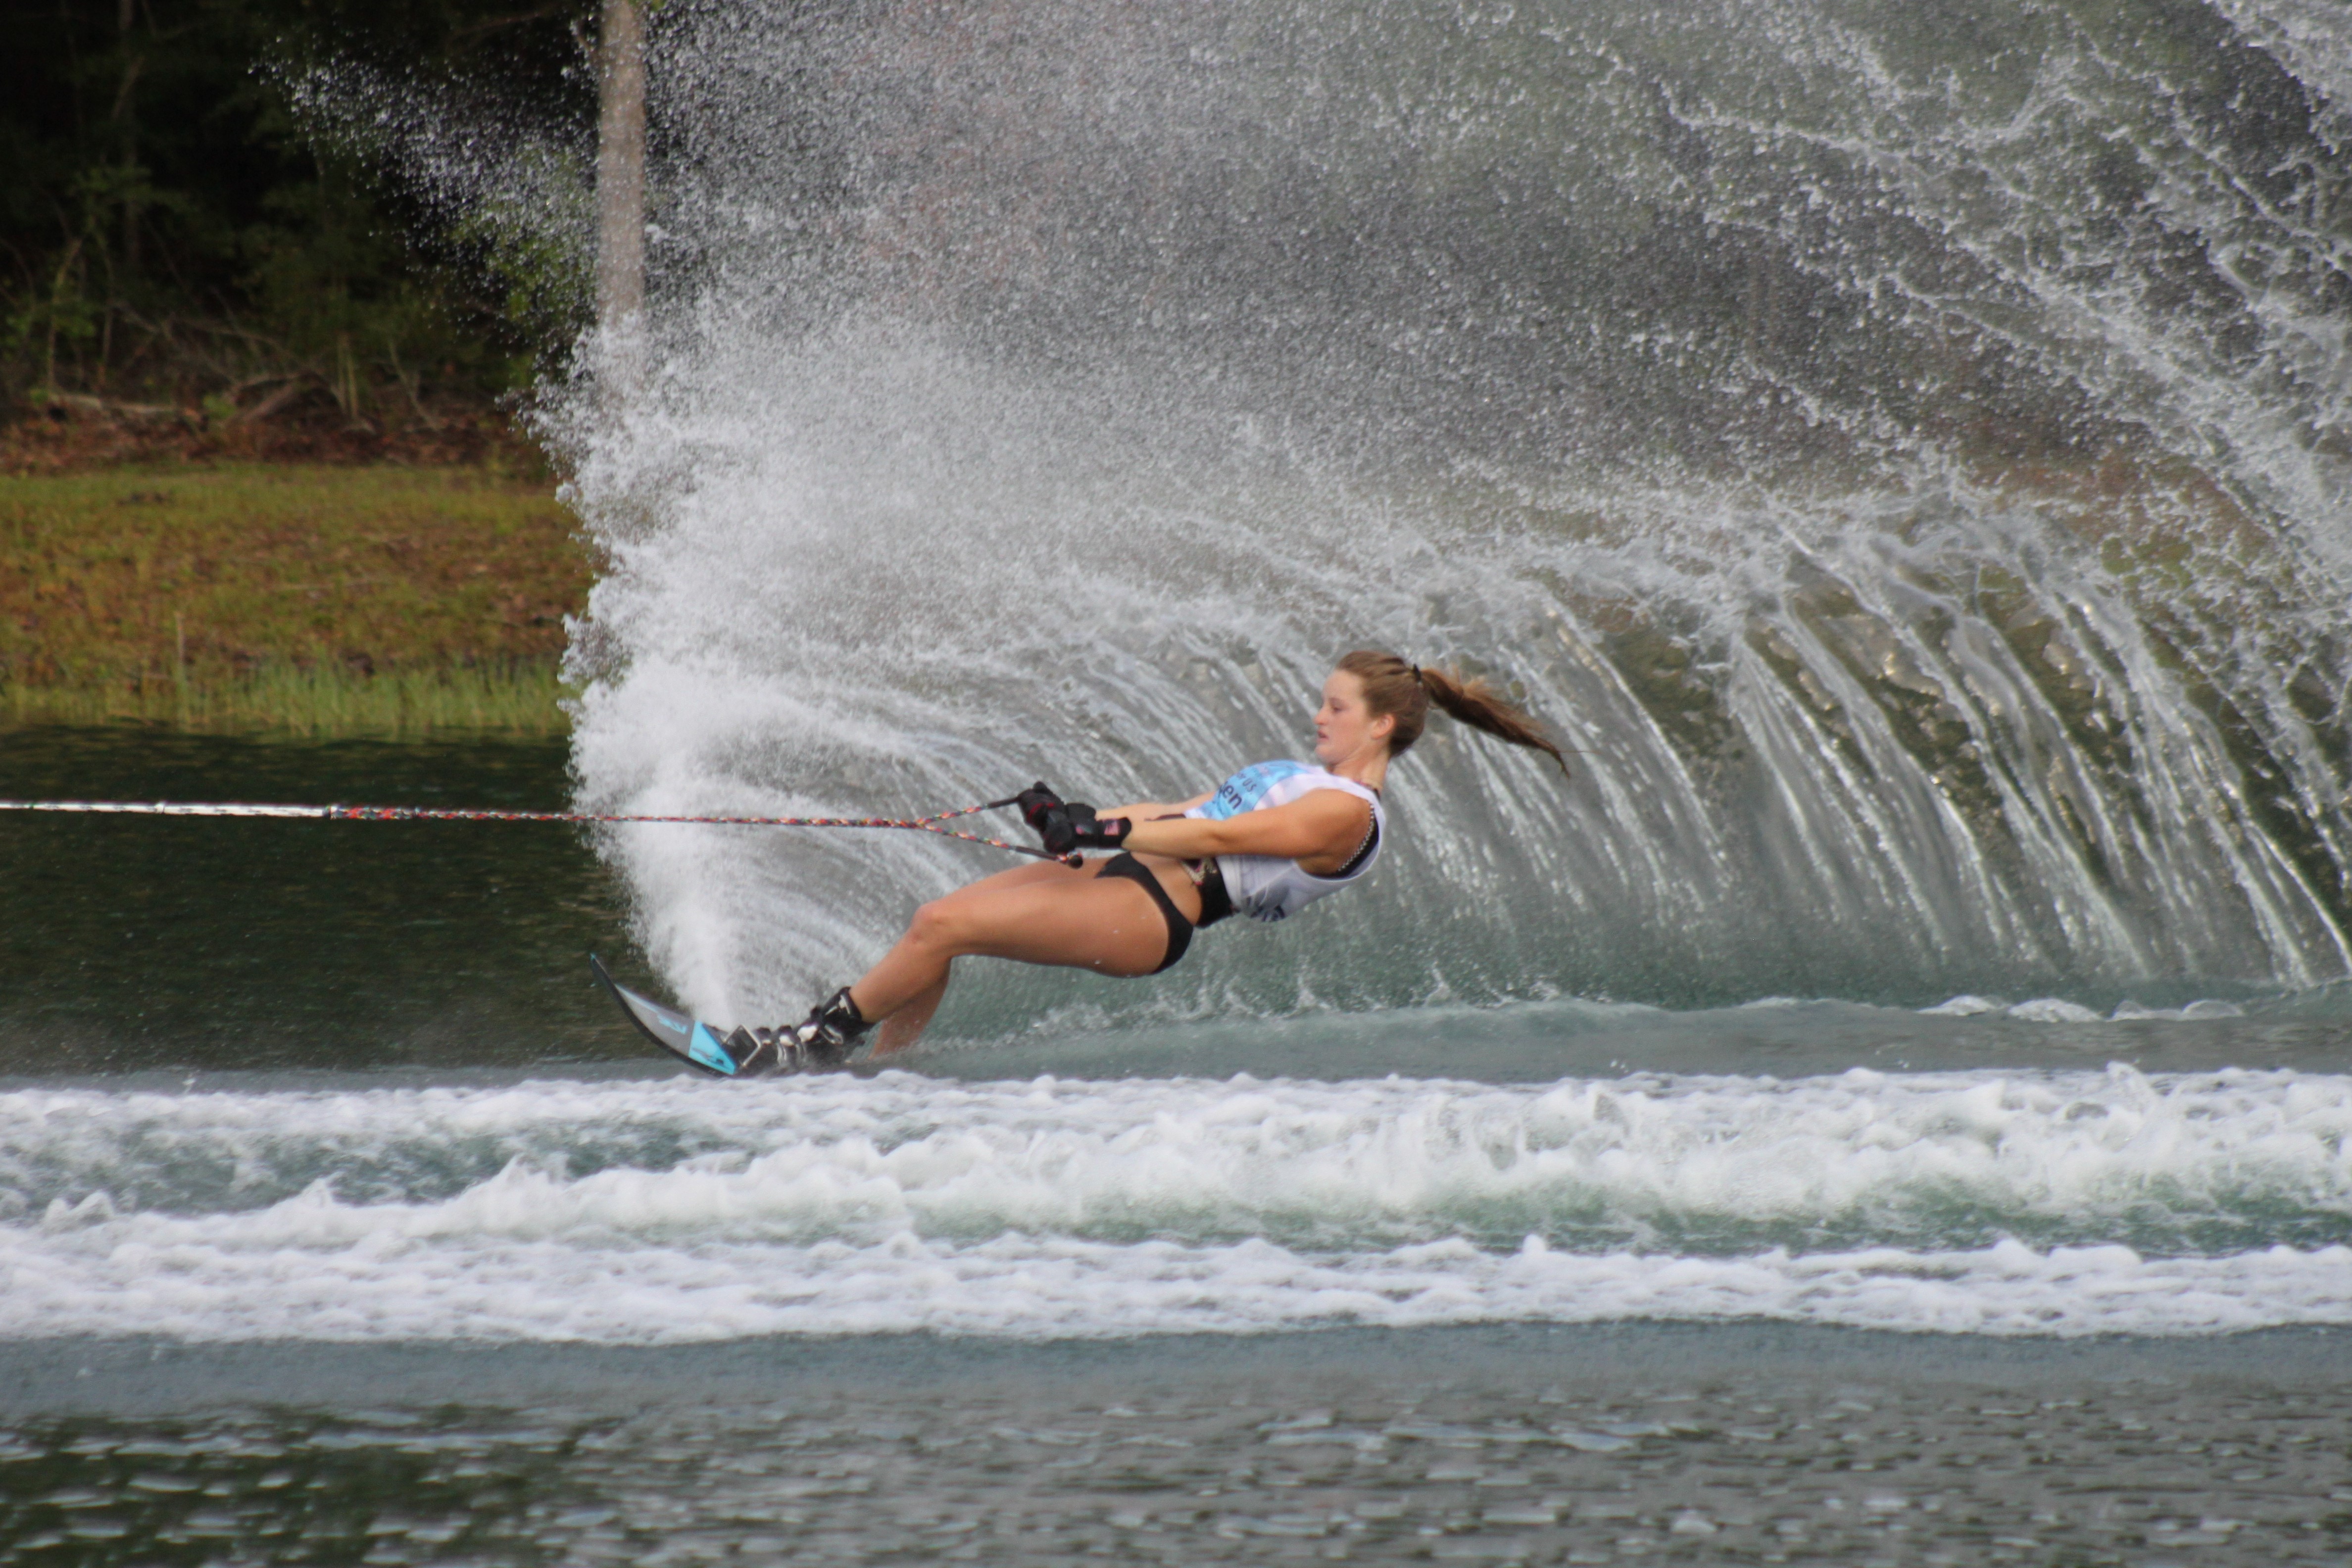 water skiing tricks